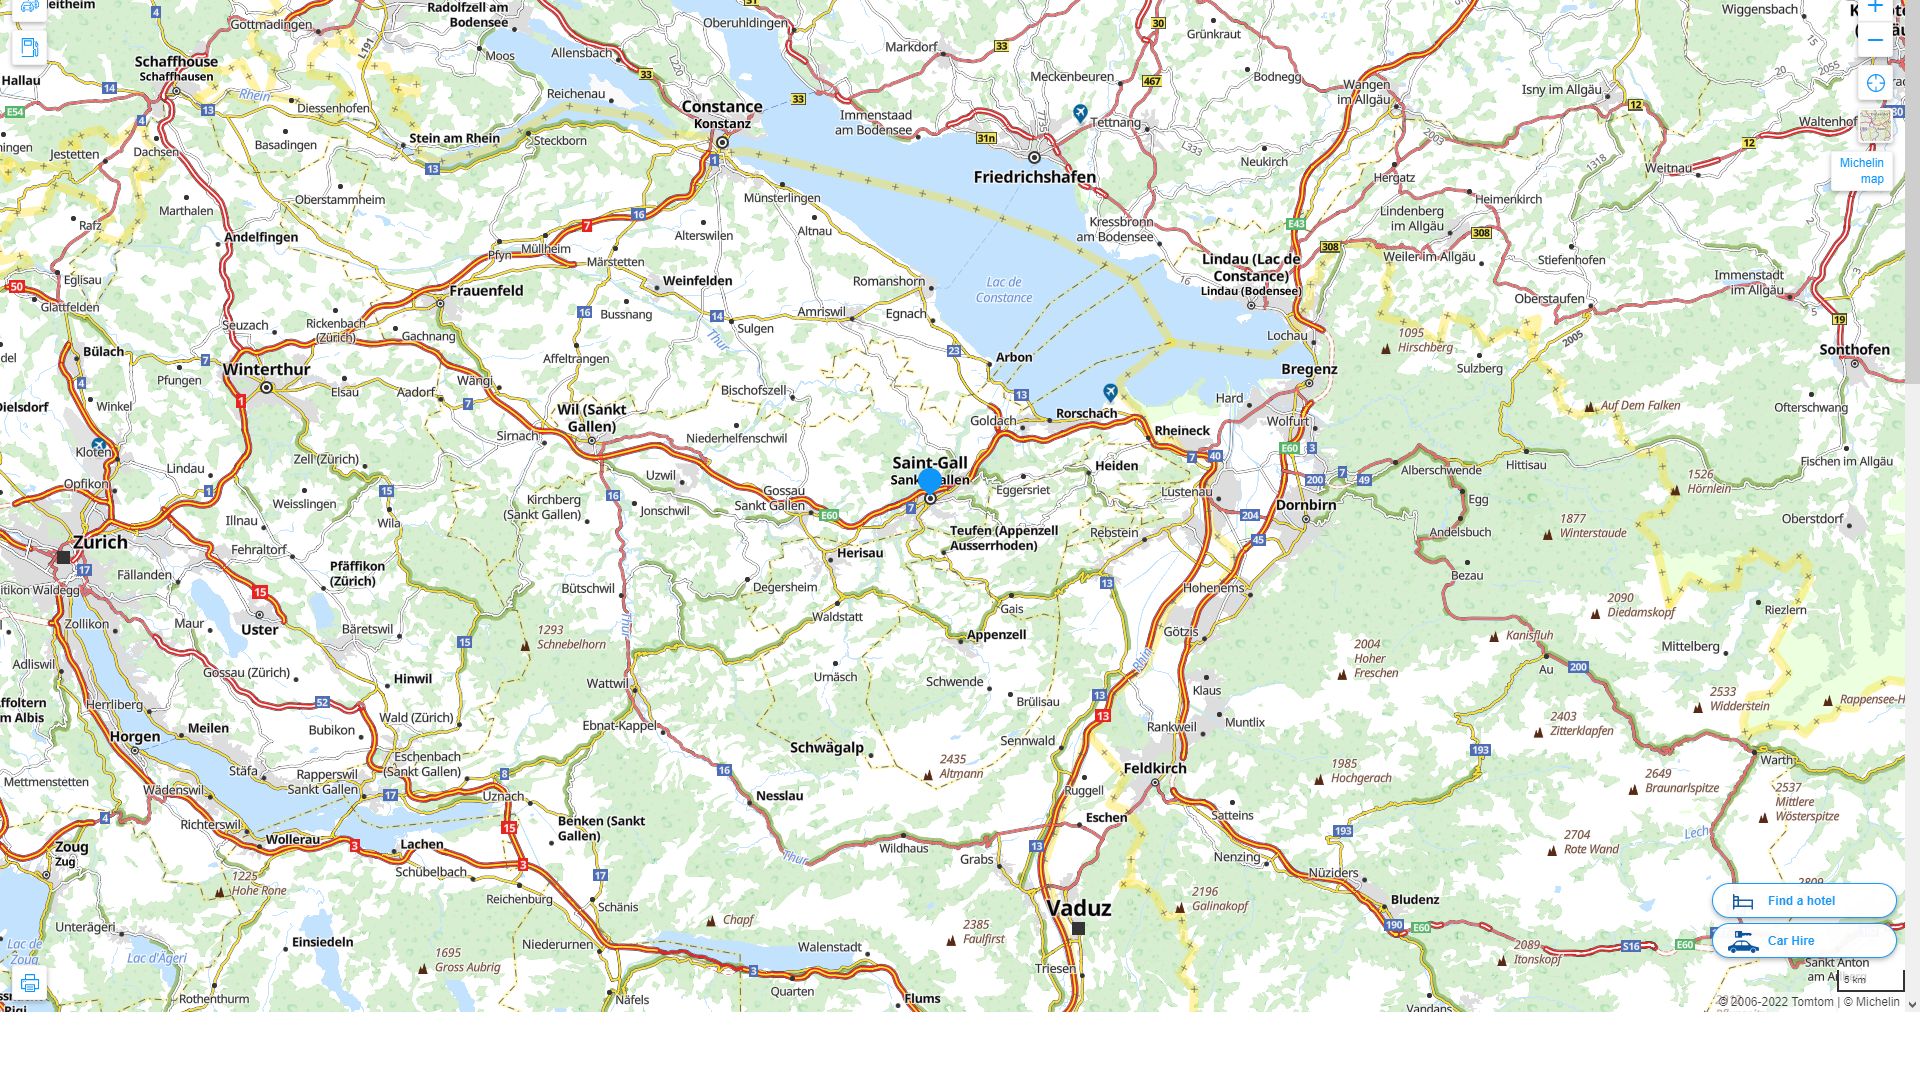 St. Gallen Highway and Road Map